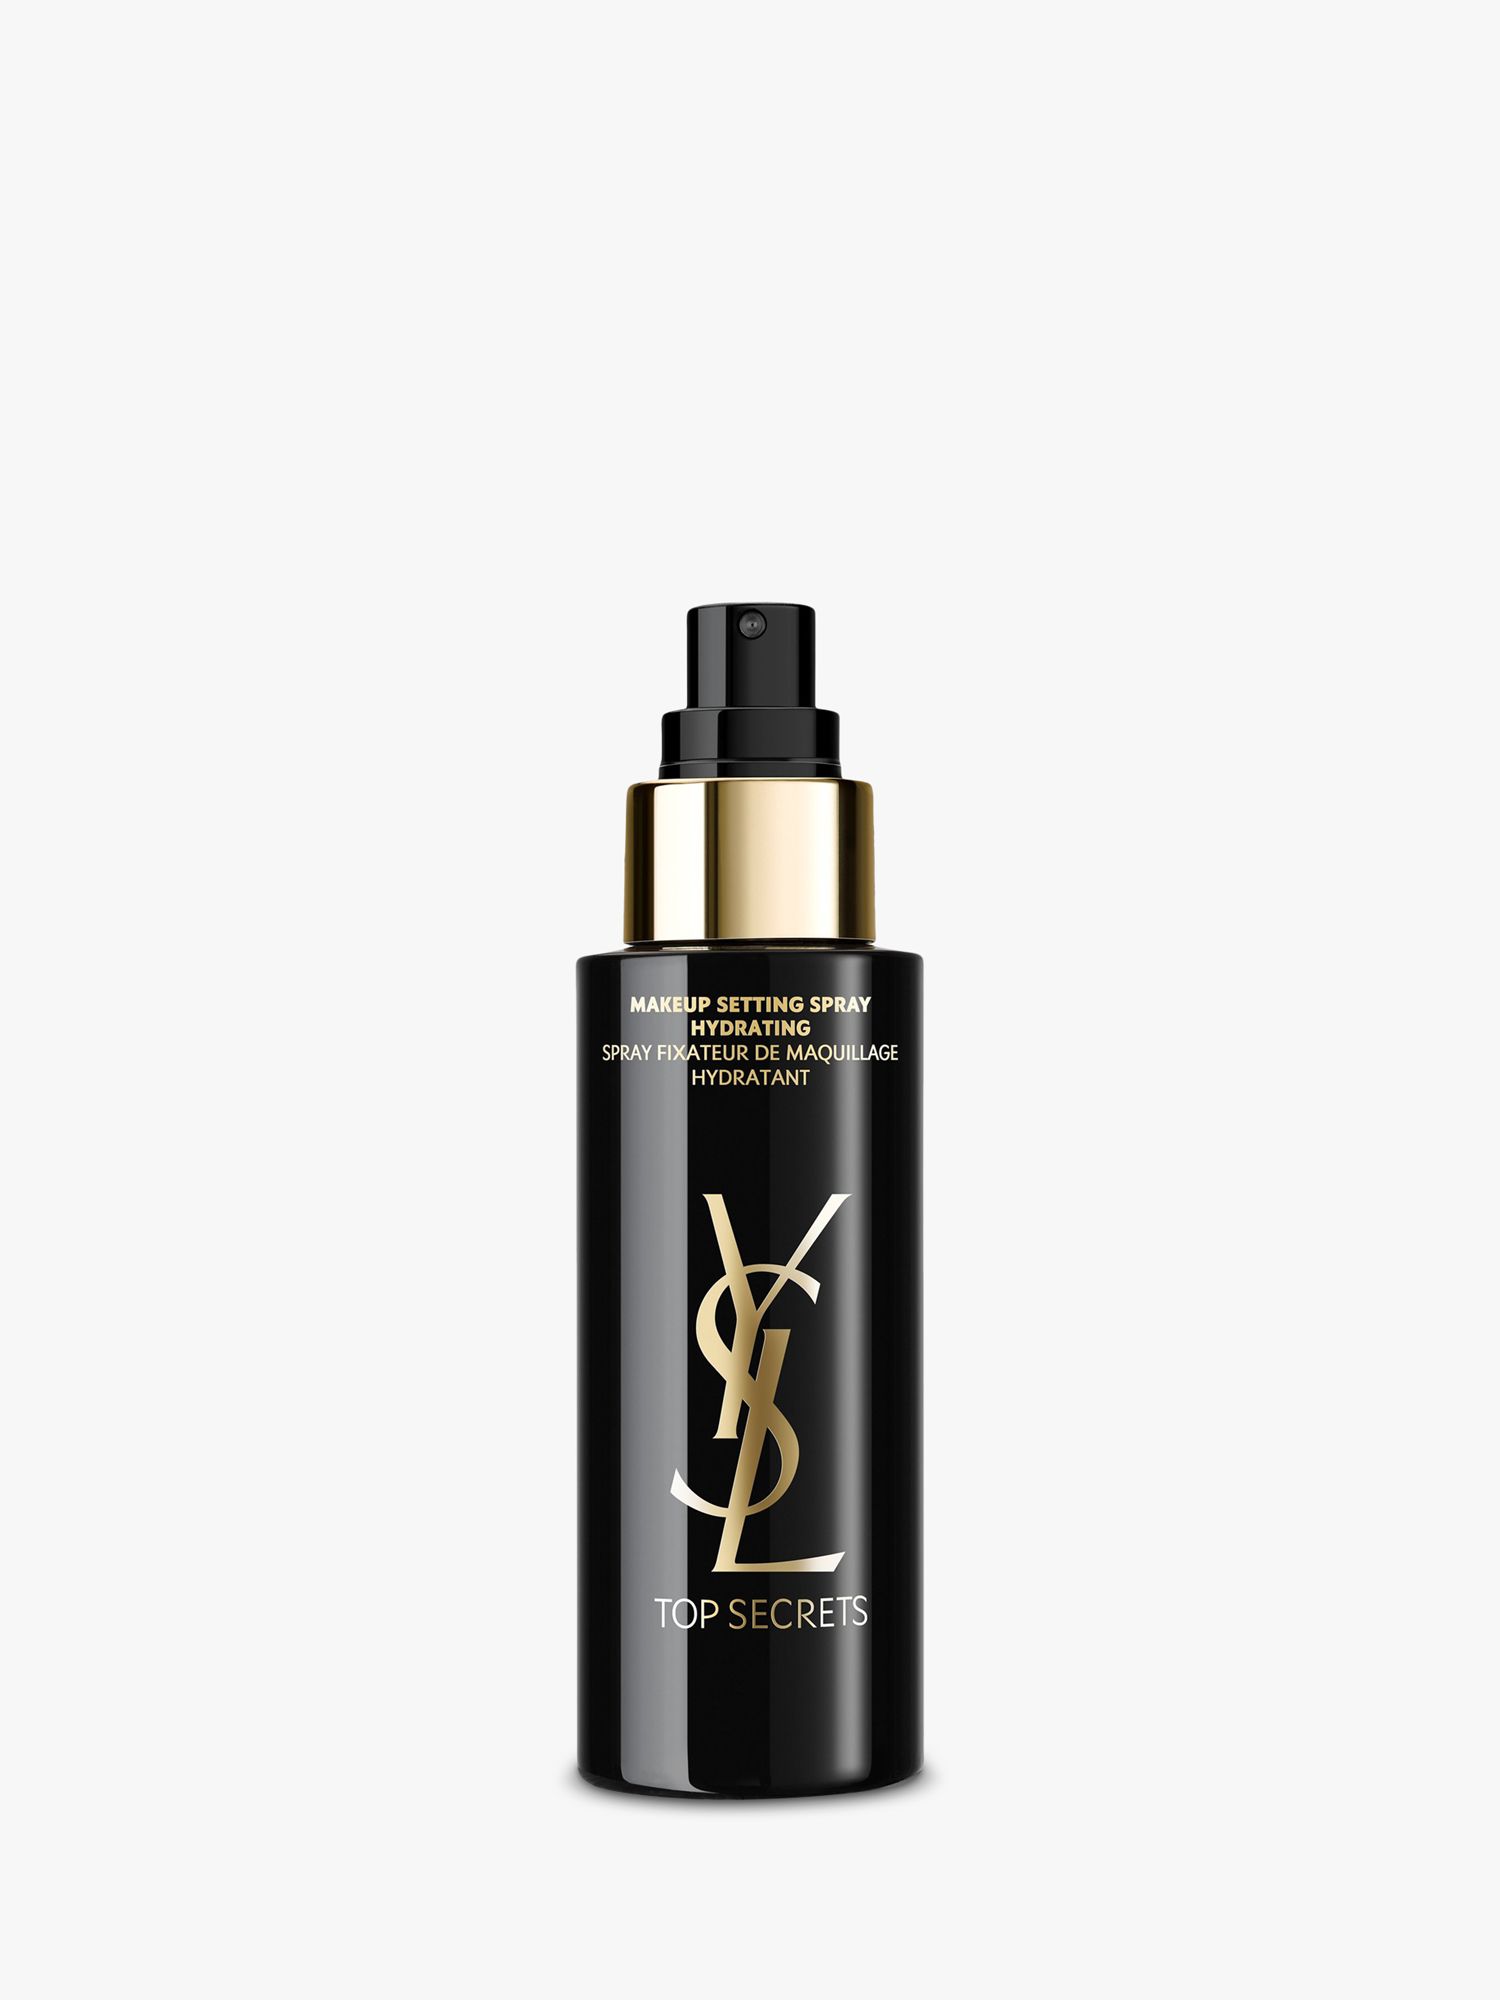 Yves Saint Laurent Top Secrets Makeup Setting Spray, 100ml at John